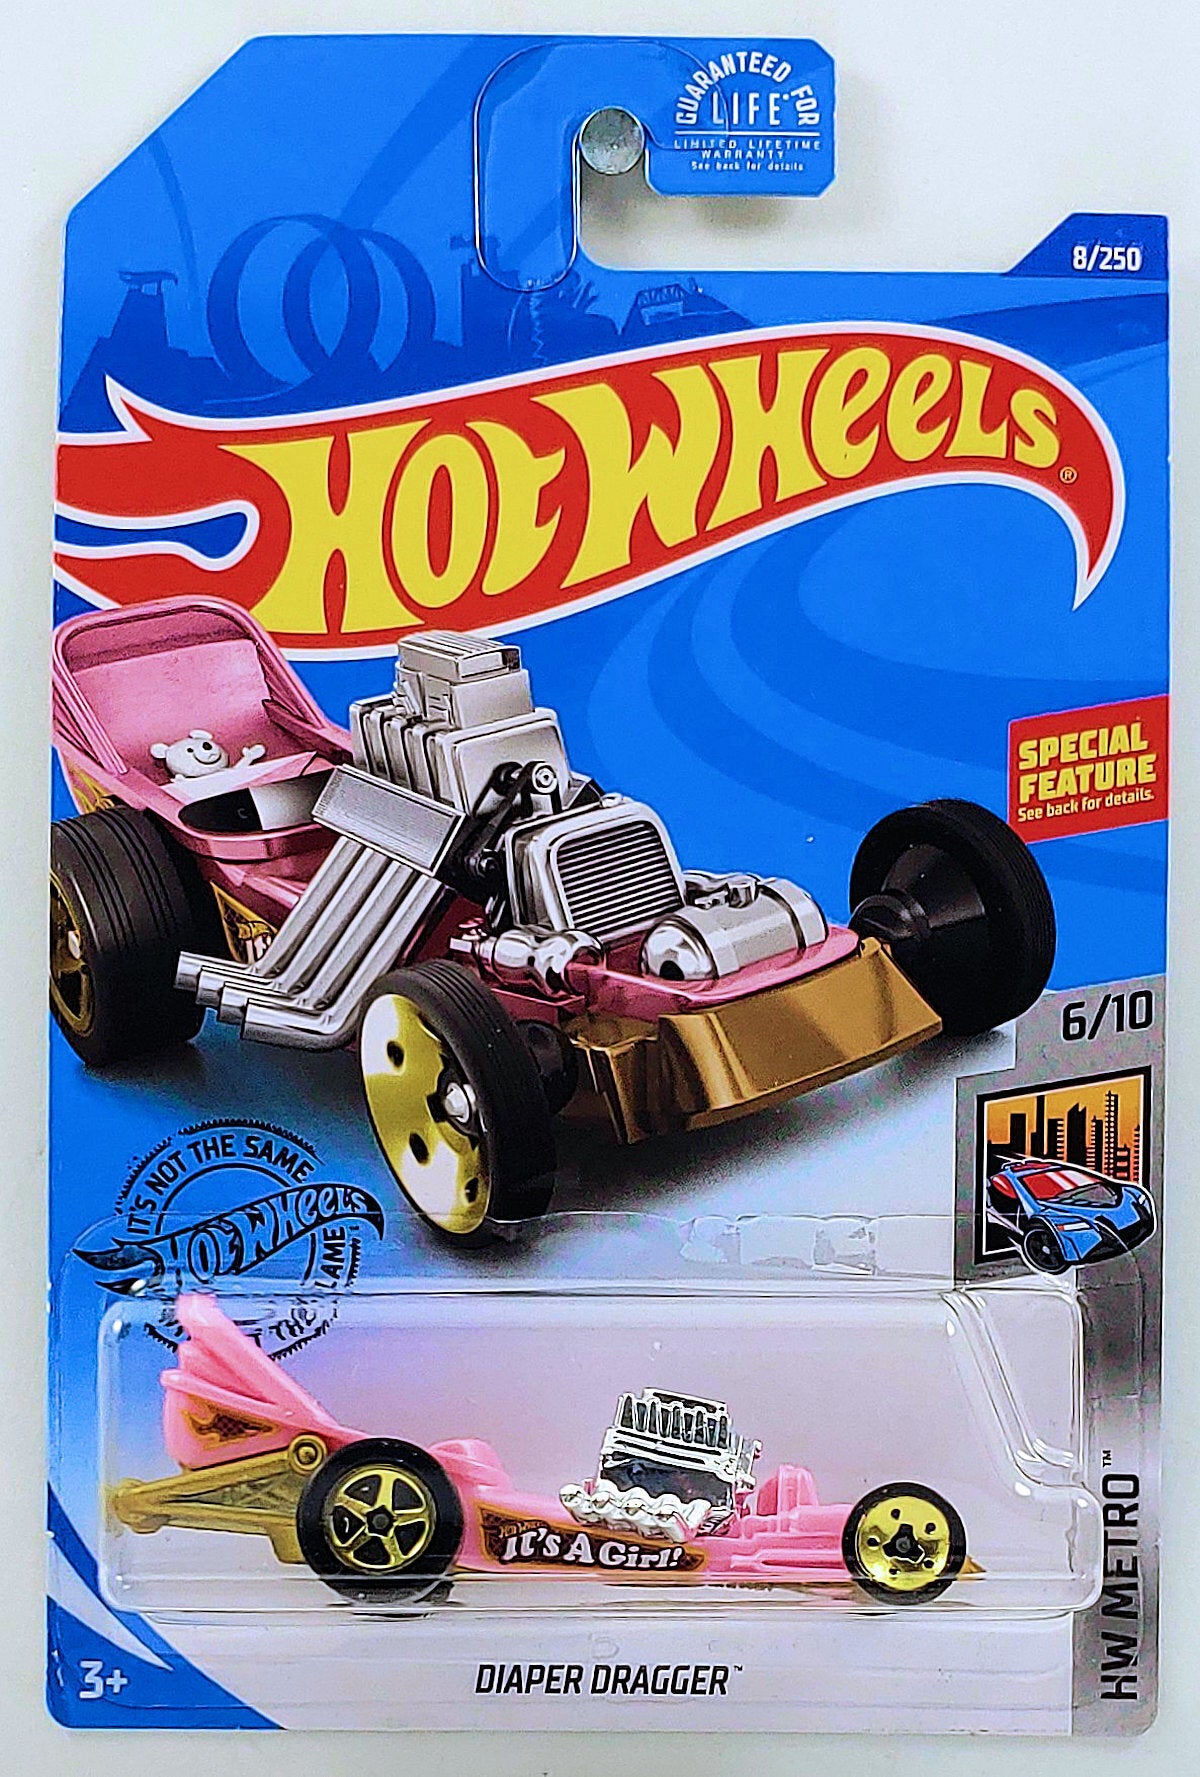 Hot Wheels 2020 - Collector # 008/250 - HW Metro 6/10 - Diaper Dragger - Pink - USA Card